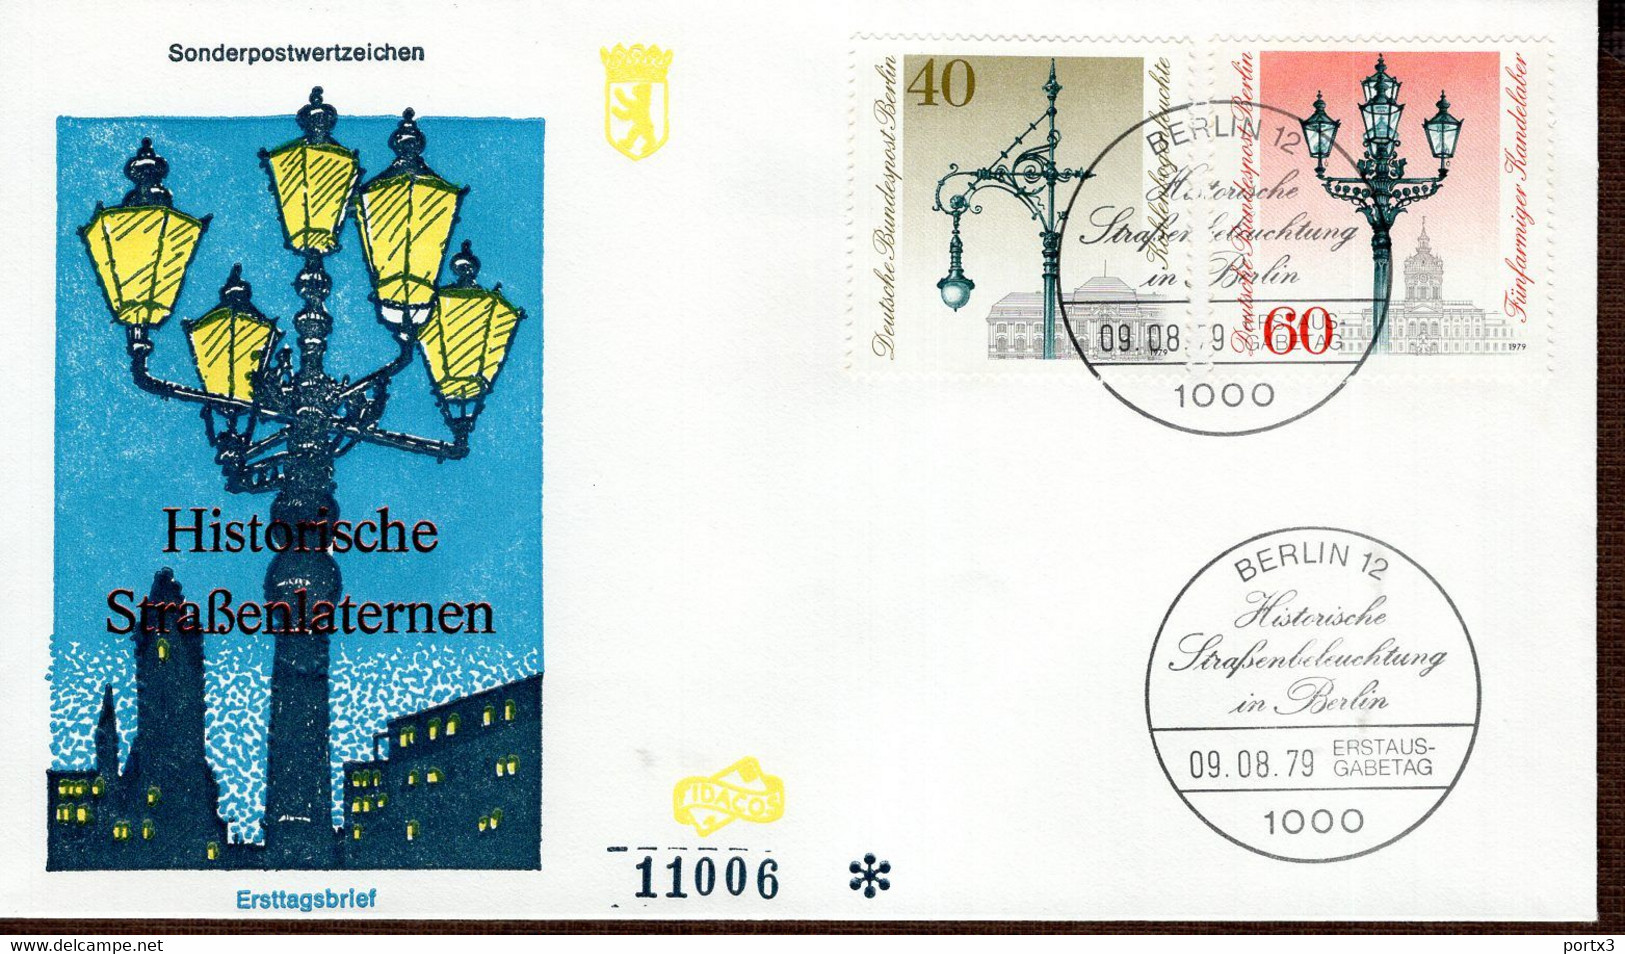 Berlin FDC aus 1979 ex 12 items  gestempelt / used / oblitéré (Berl 023)